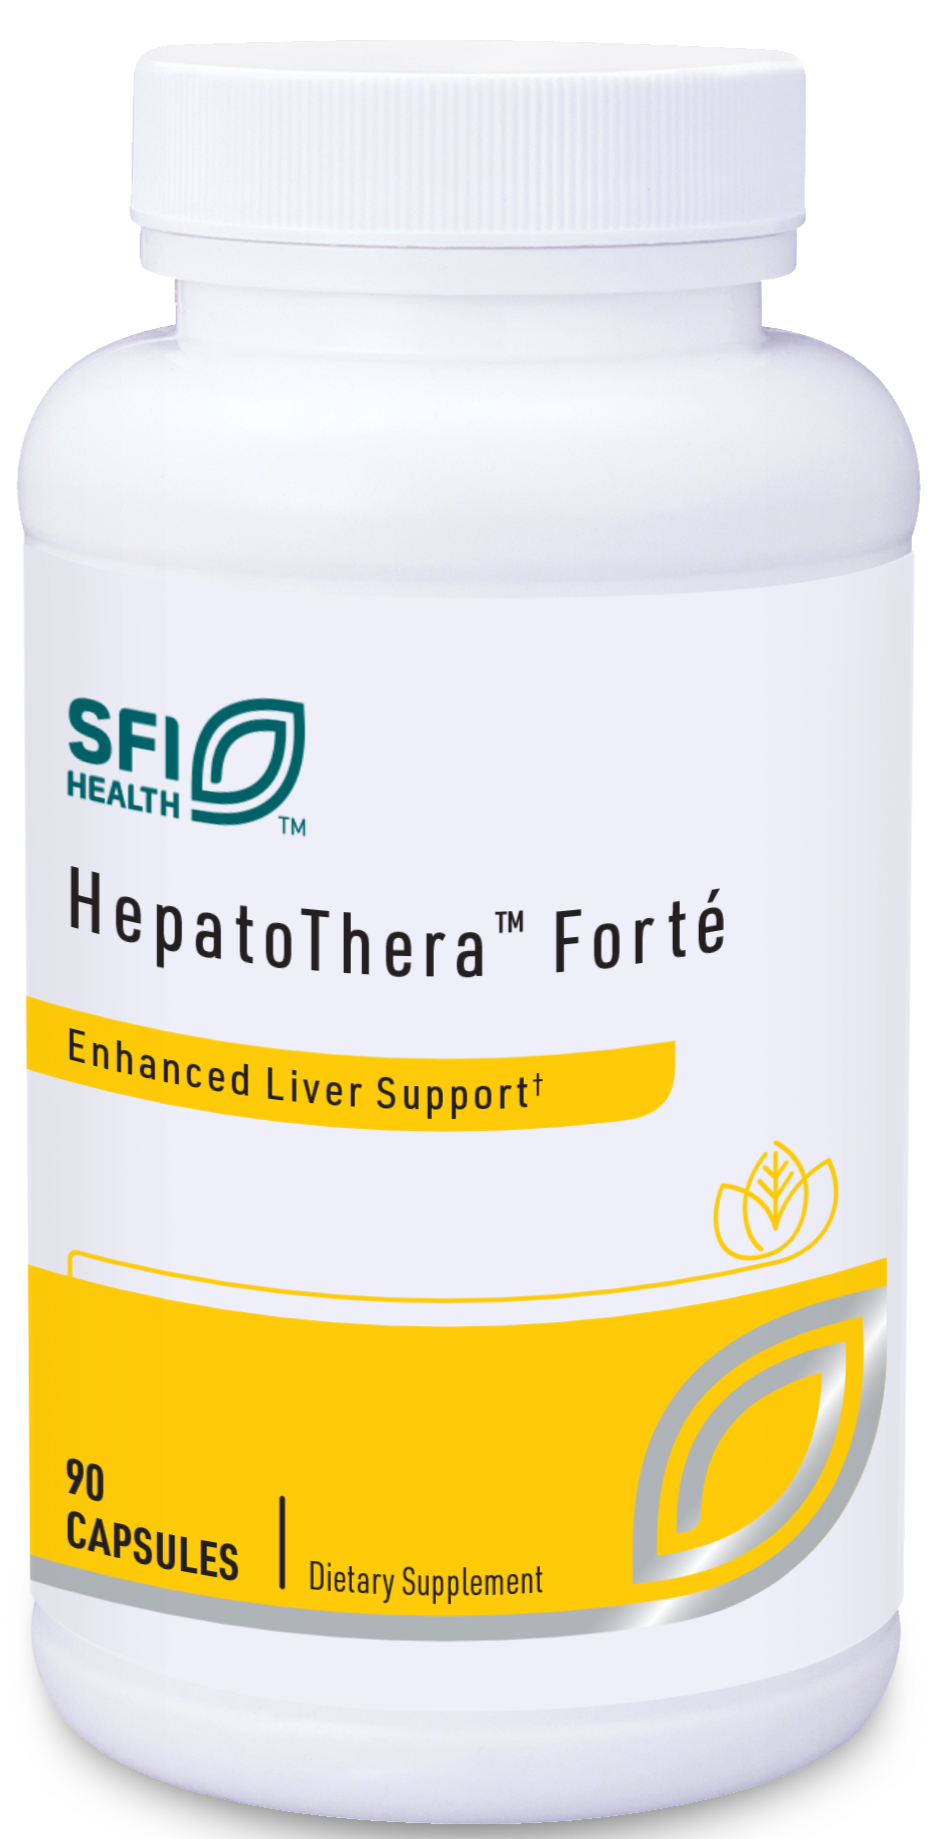 HepatoThera Forte